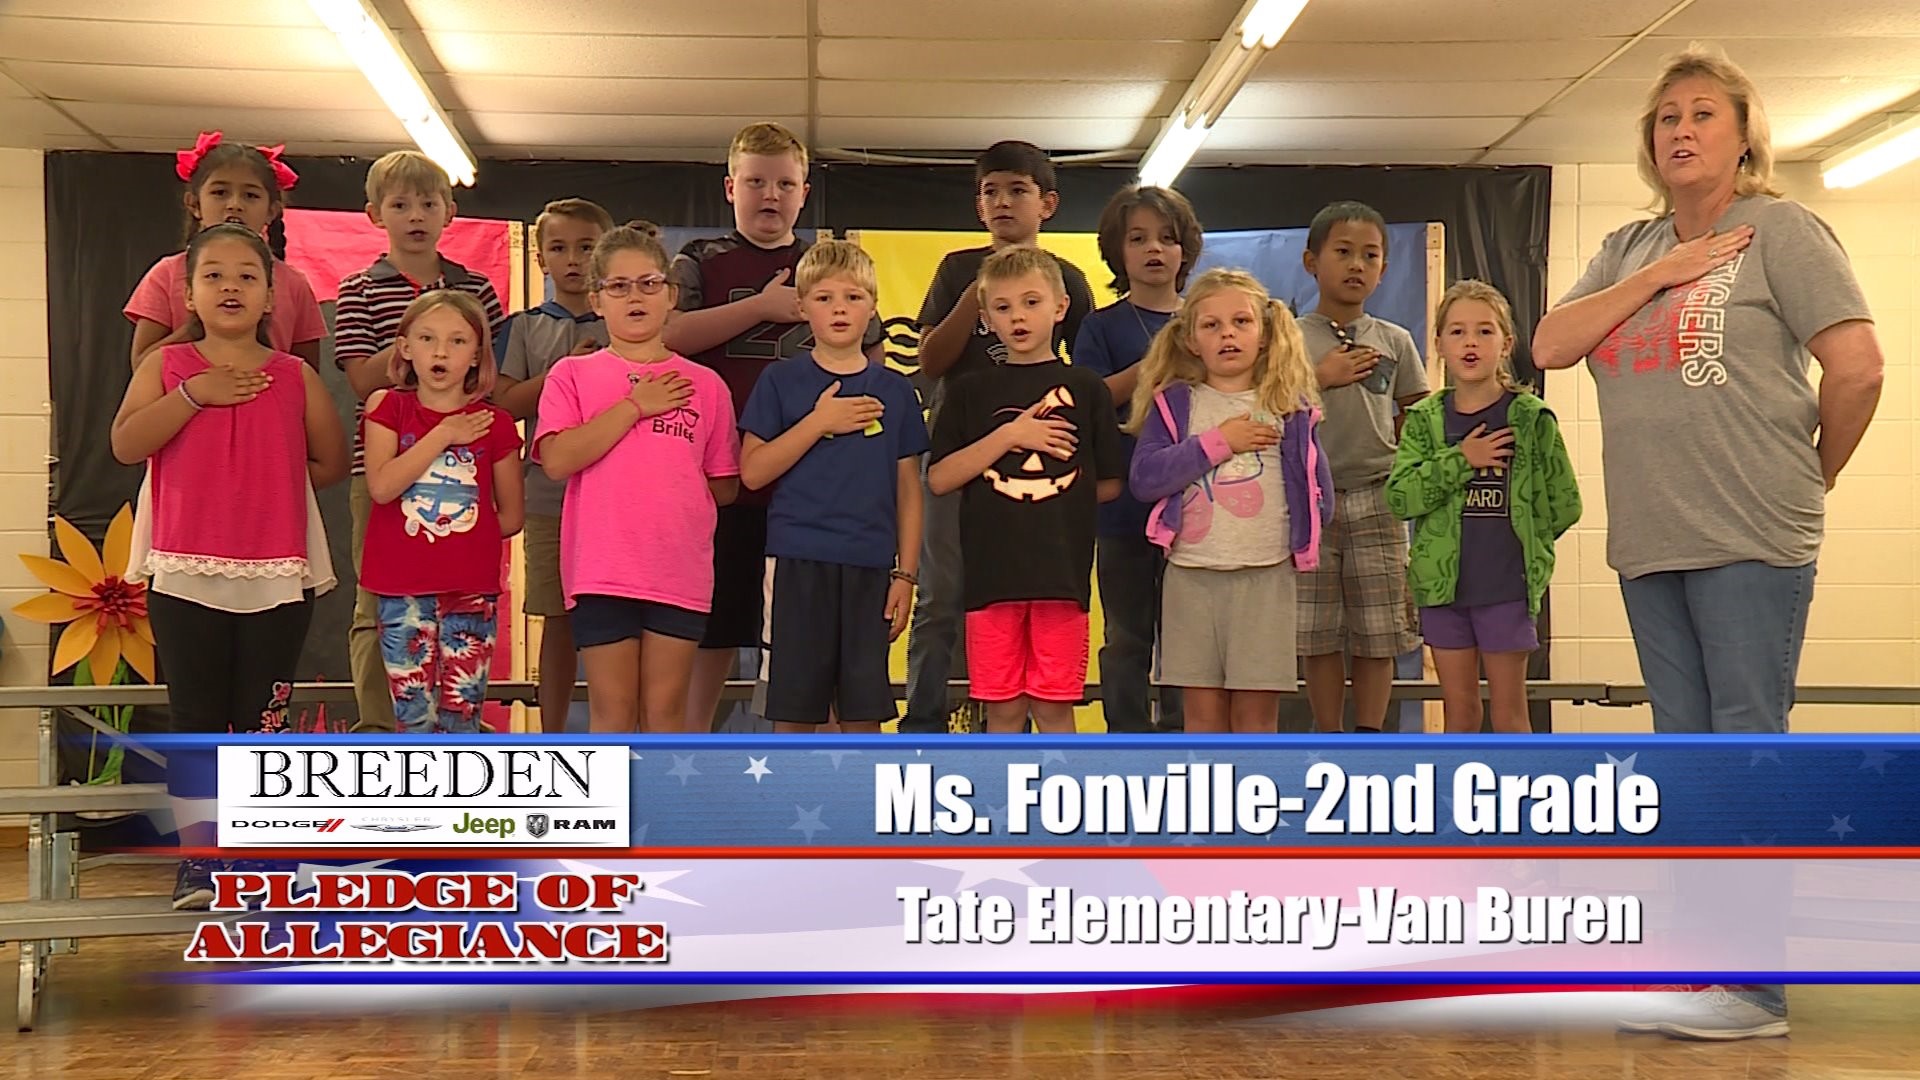 Ms. Fonville  2nd Grade Tate Elementary, Van Buren